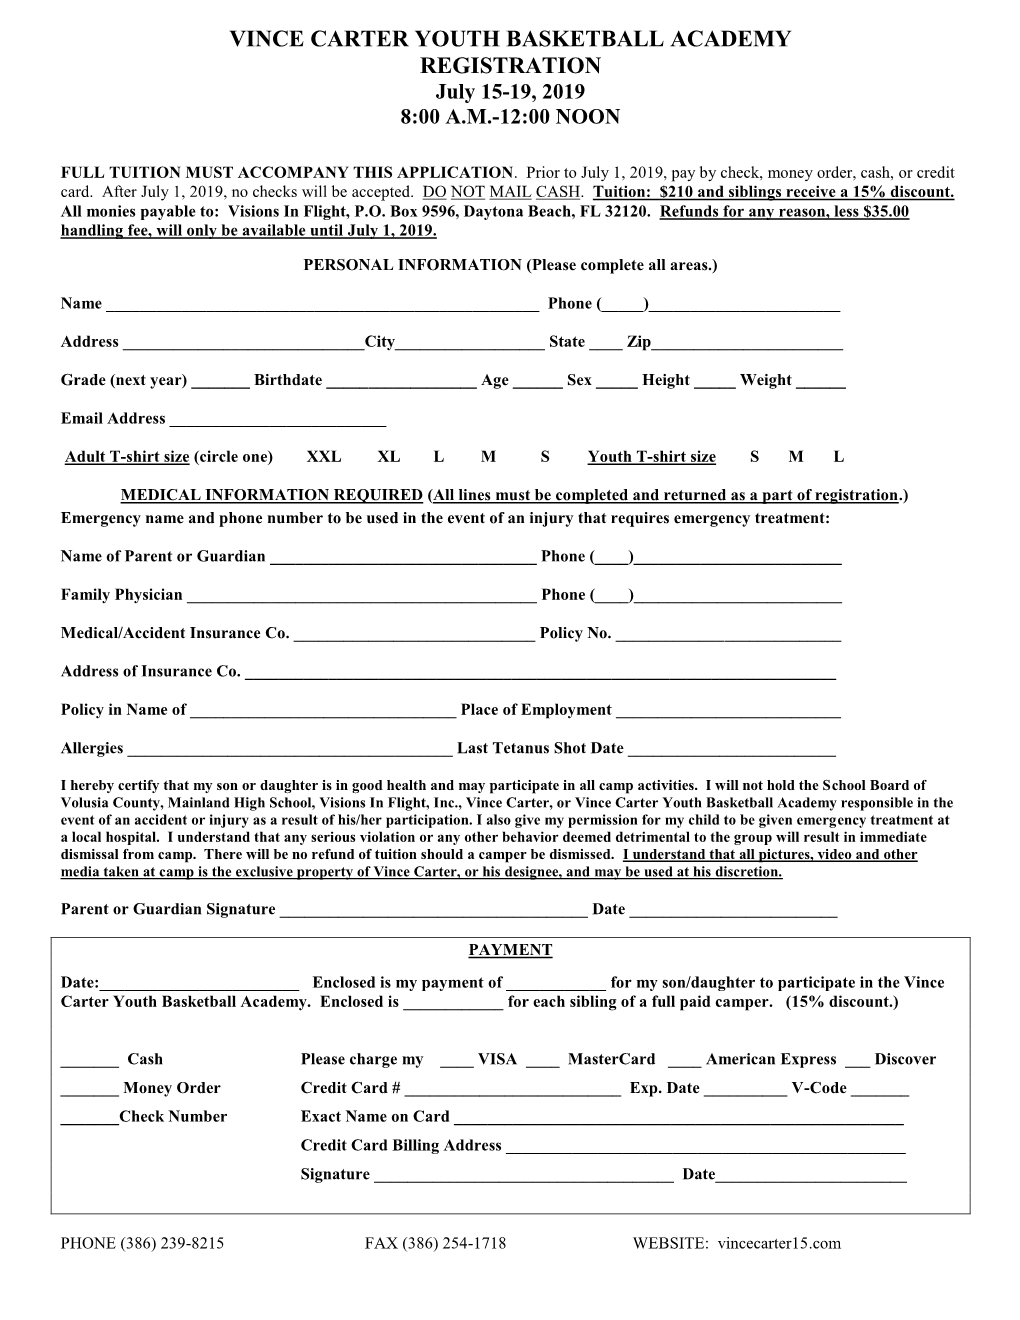 The 2019 Registration Form